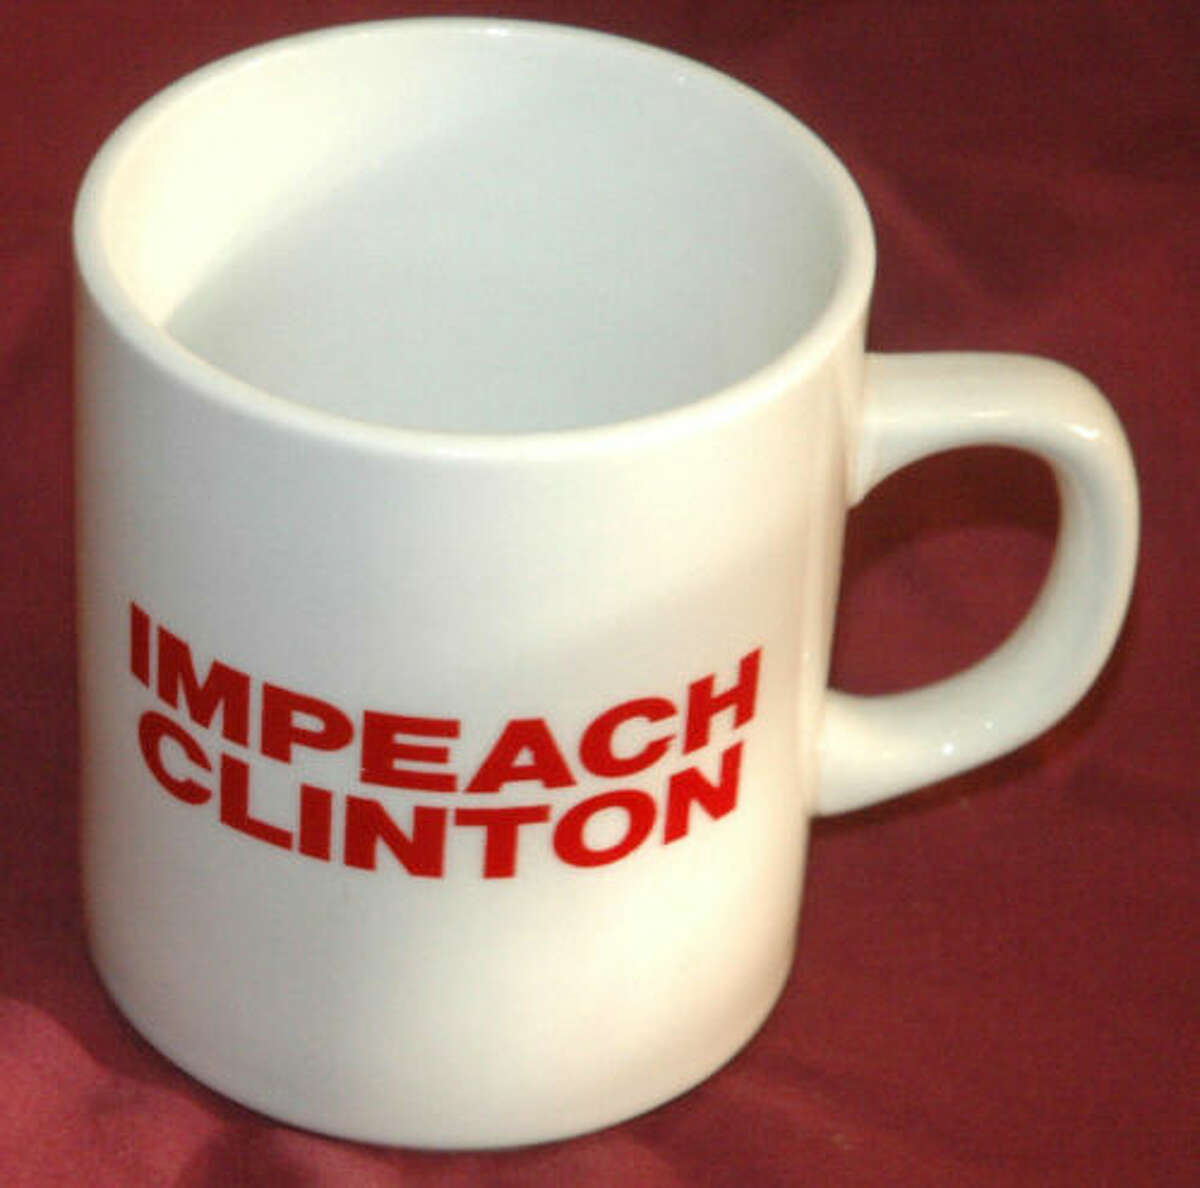 It's simple: it's a mug, it holds liquids, and it advertises the Clinton impeachment. Vintage 1990s mug.